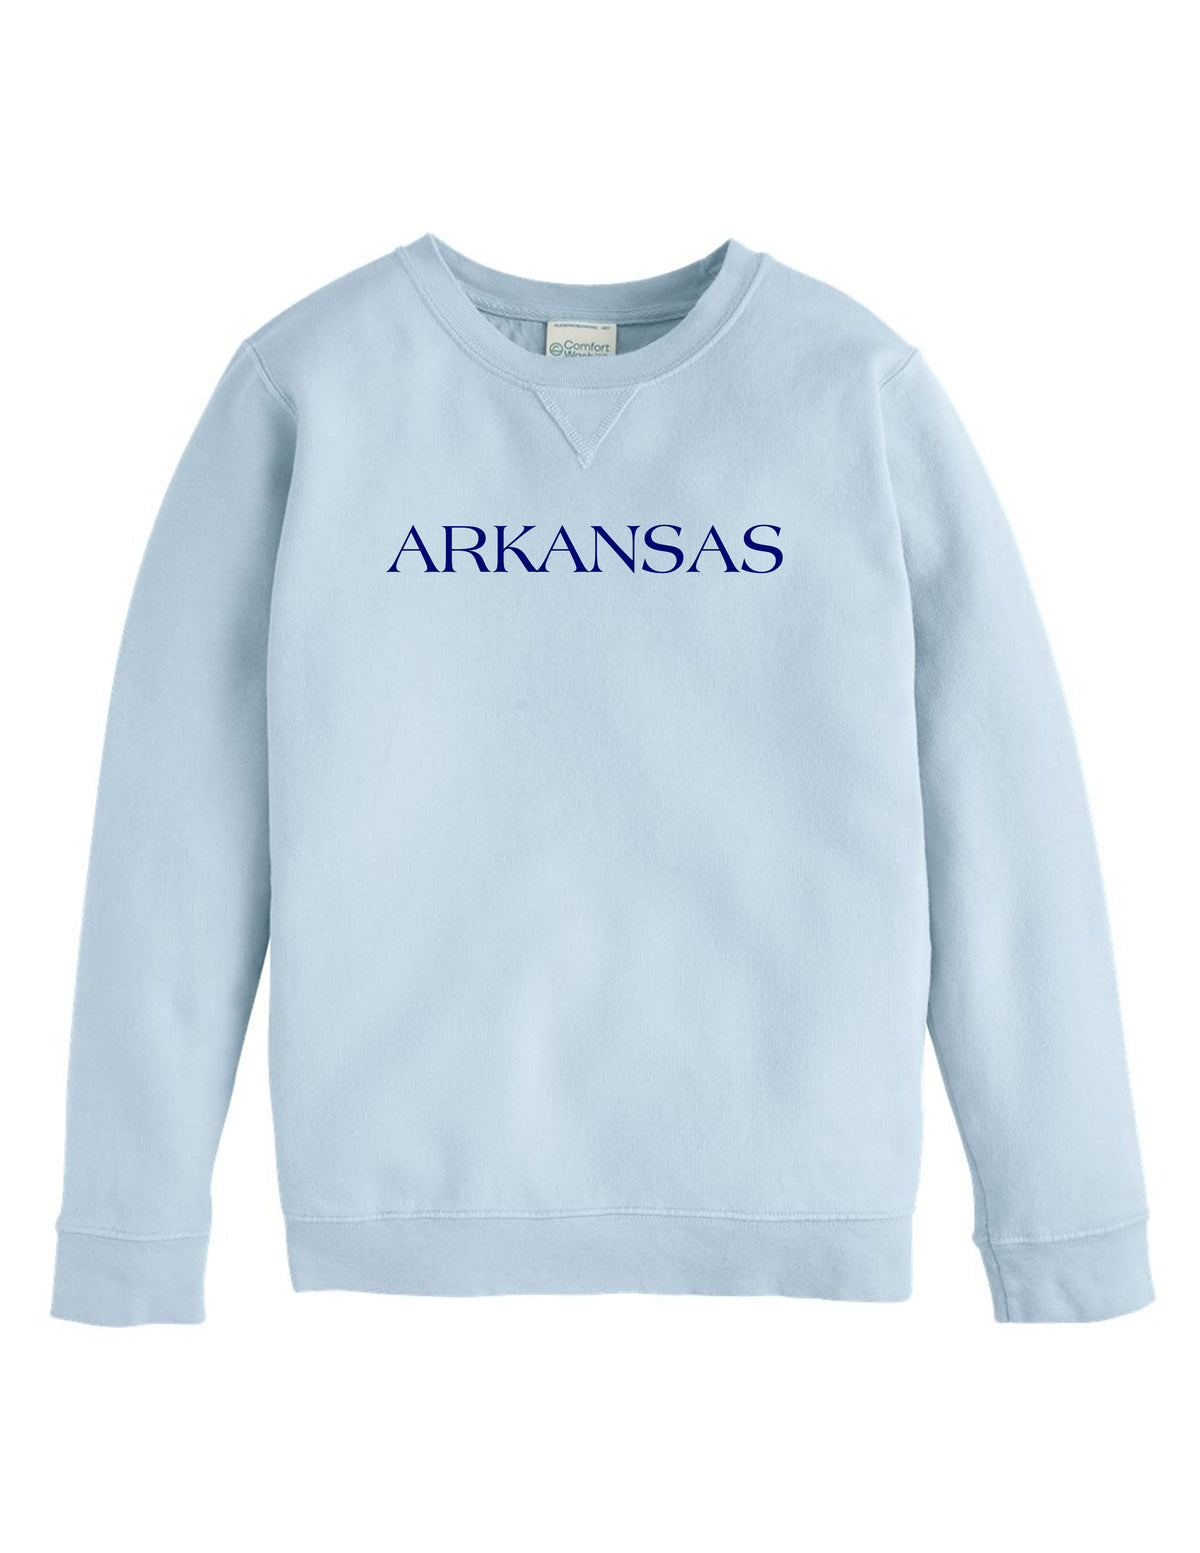 By The Sea Arkansas Youth Sweatshirt